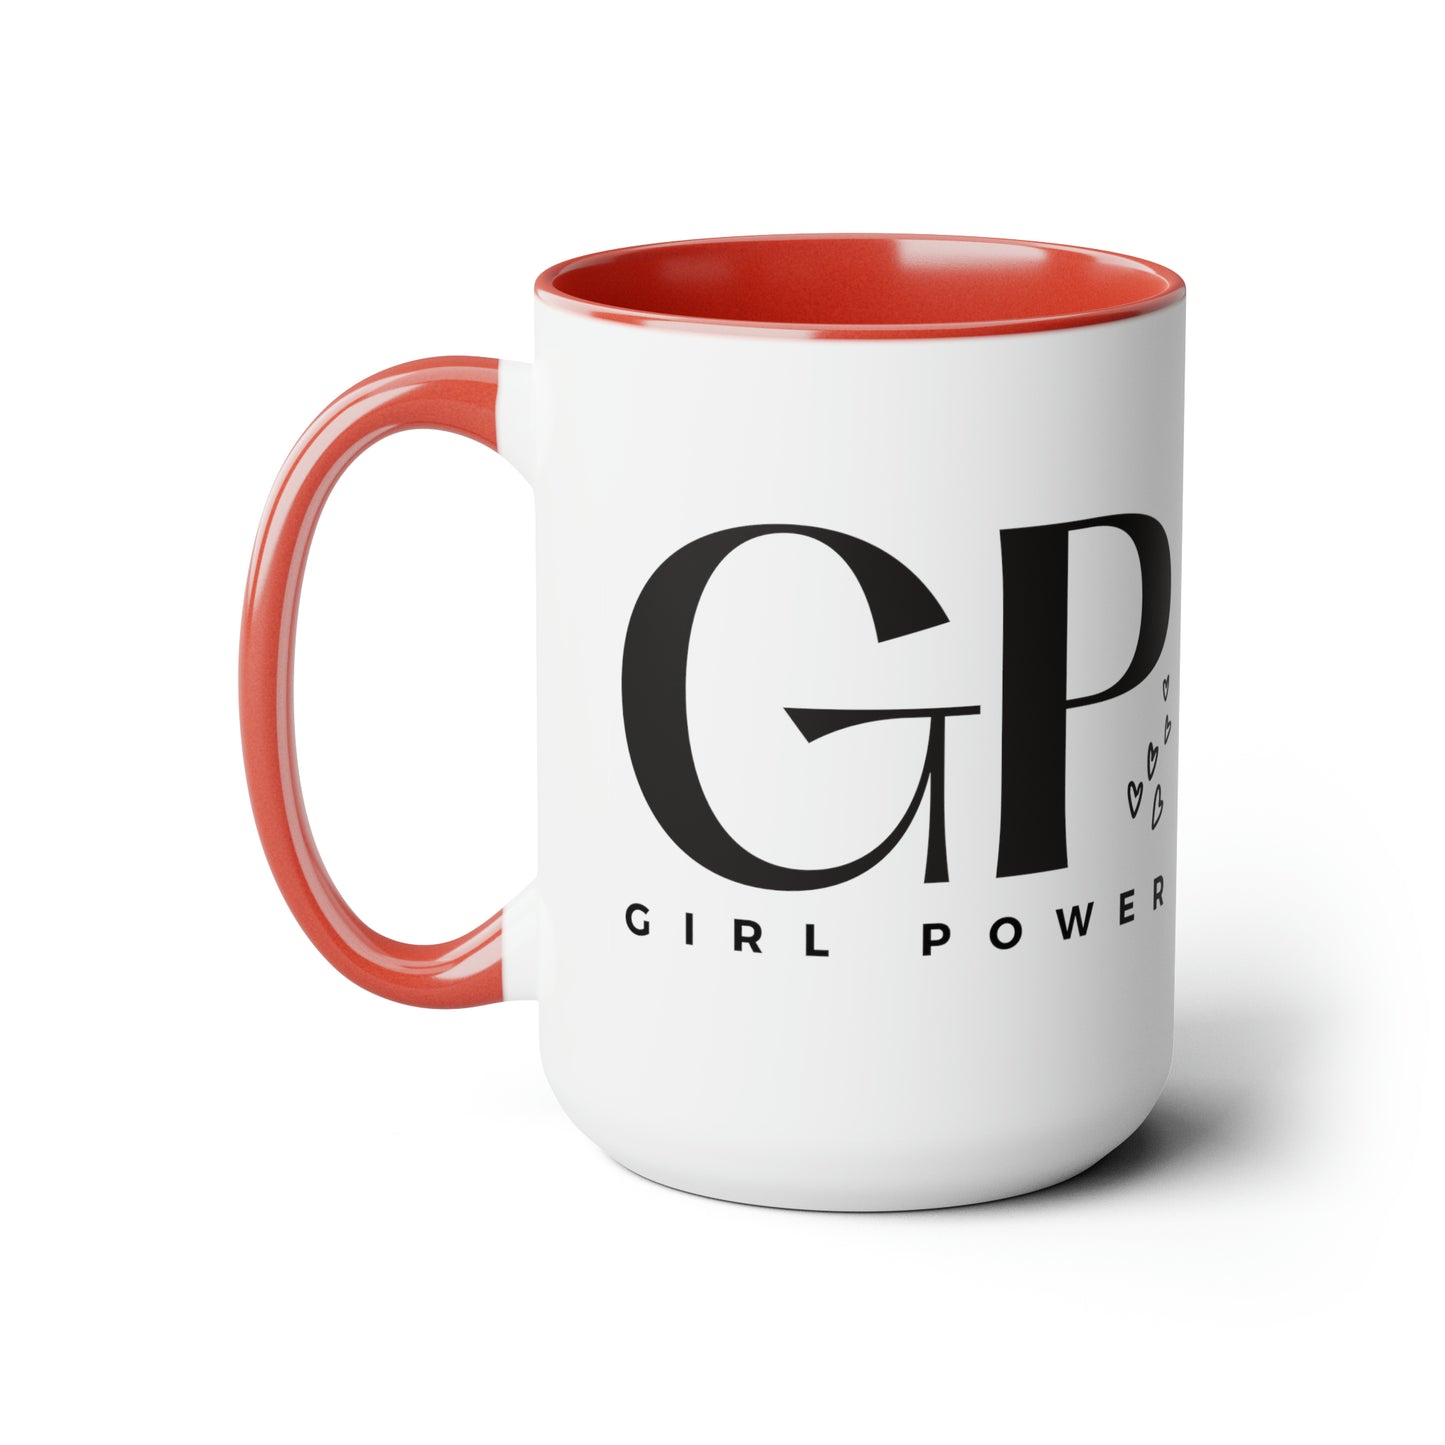 Girl Power Two-Tone Coffee Mug, 15oz Printify Pikolelie (pee-koh-lay-lee) Activewear Mug